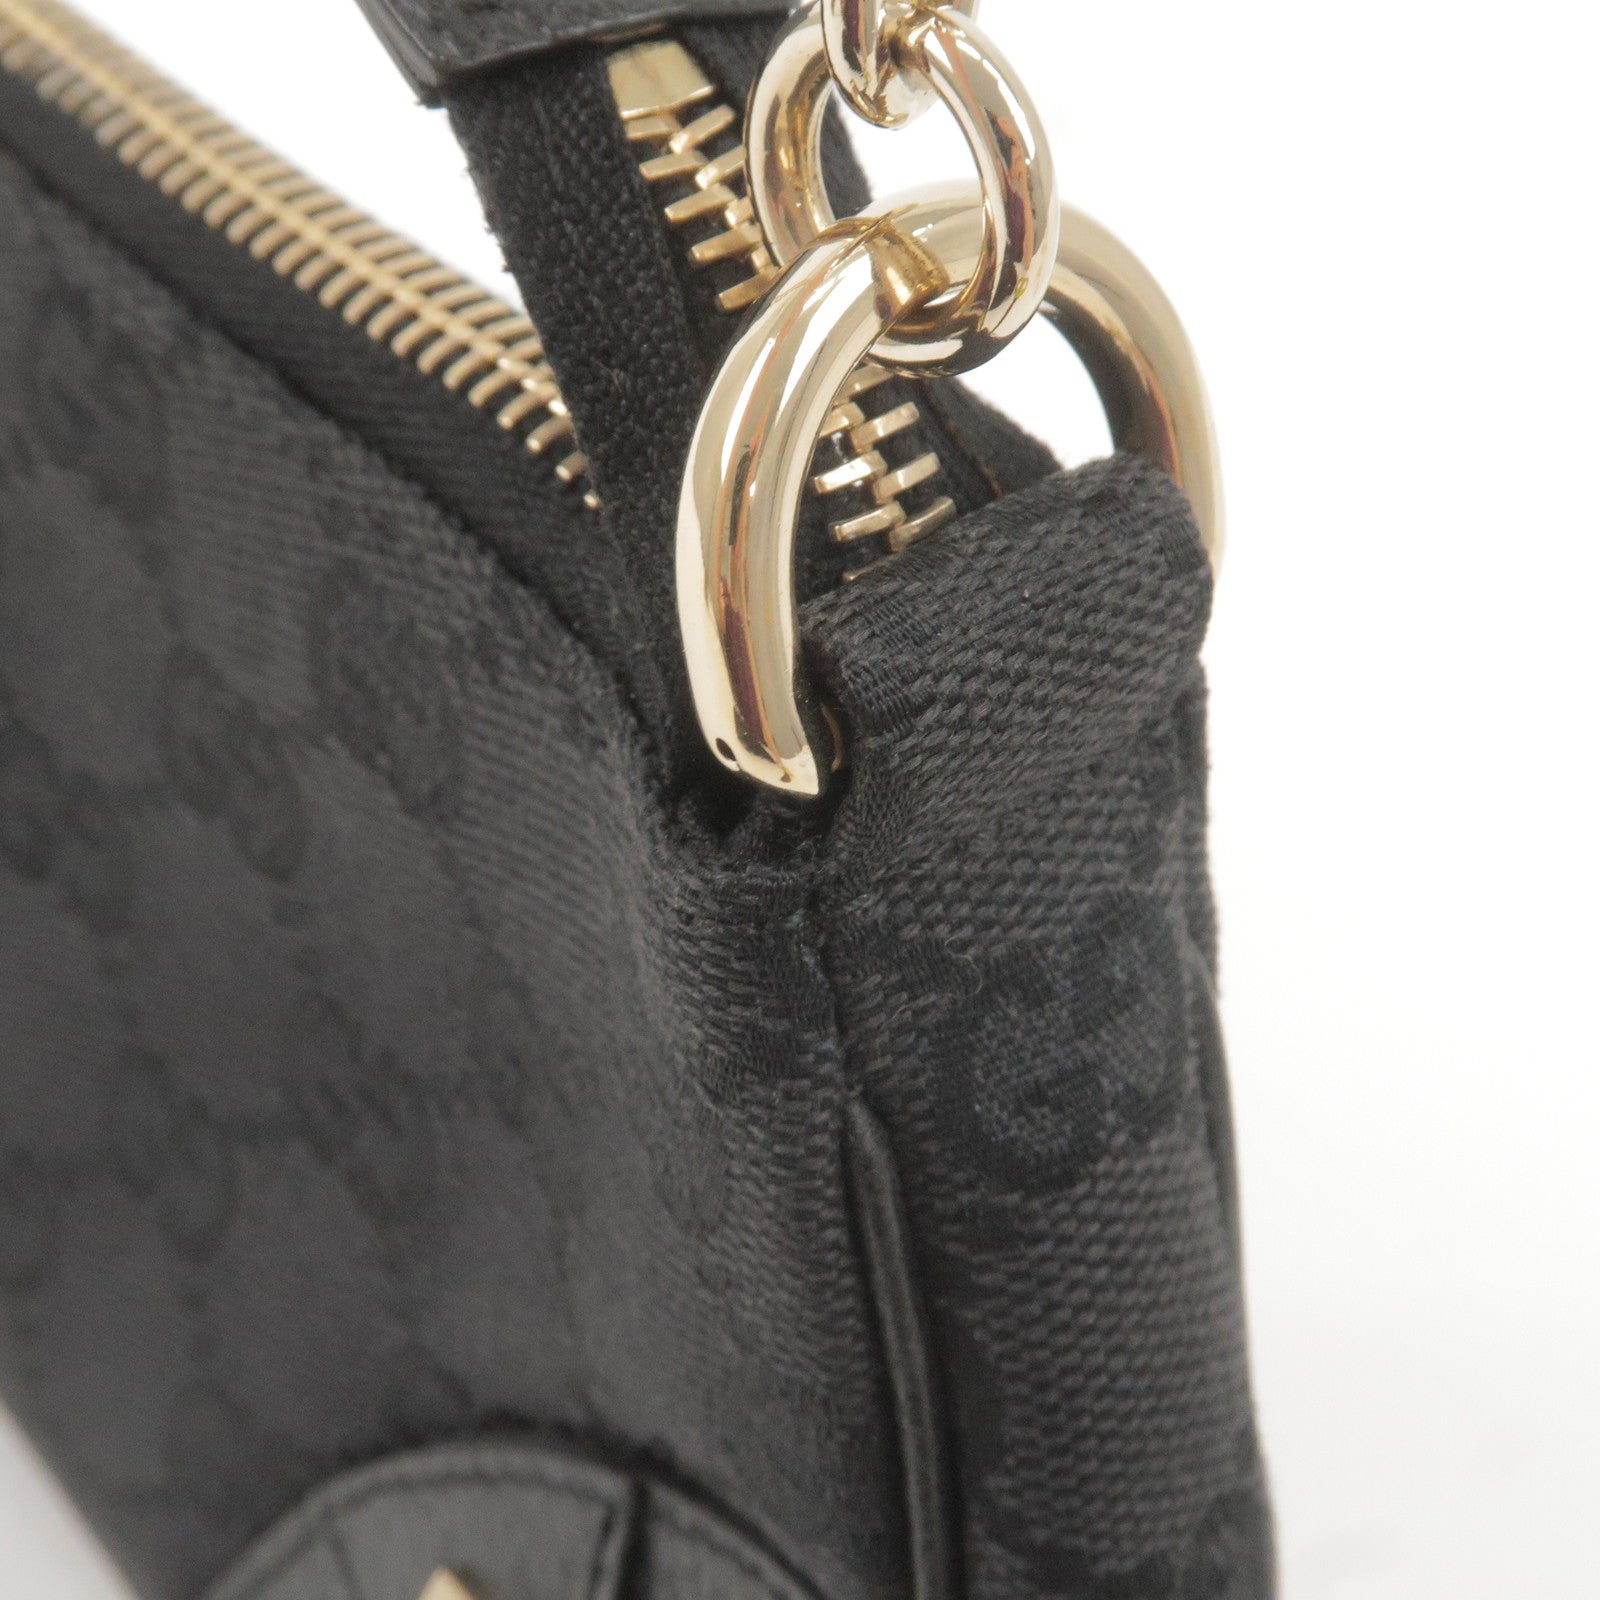 Gucci GG Monogram Canvas Brown Leather Gold Chain Pochette Clutch Shoulder  Bag